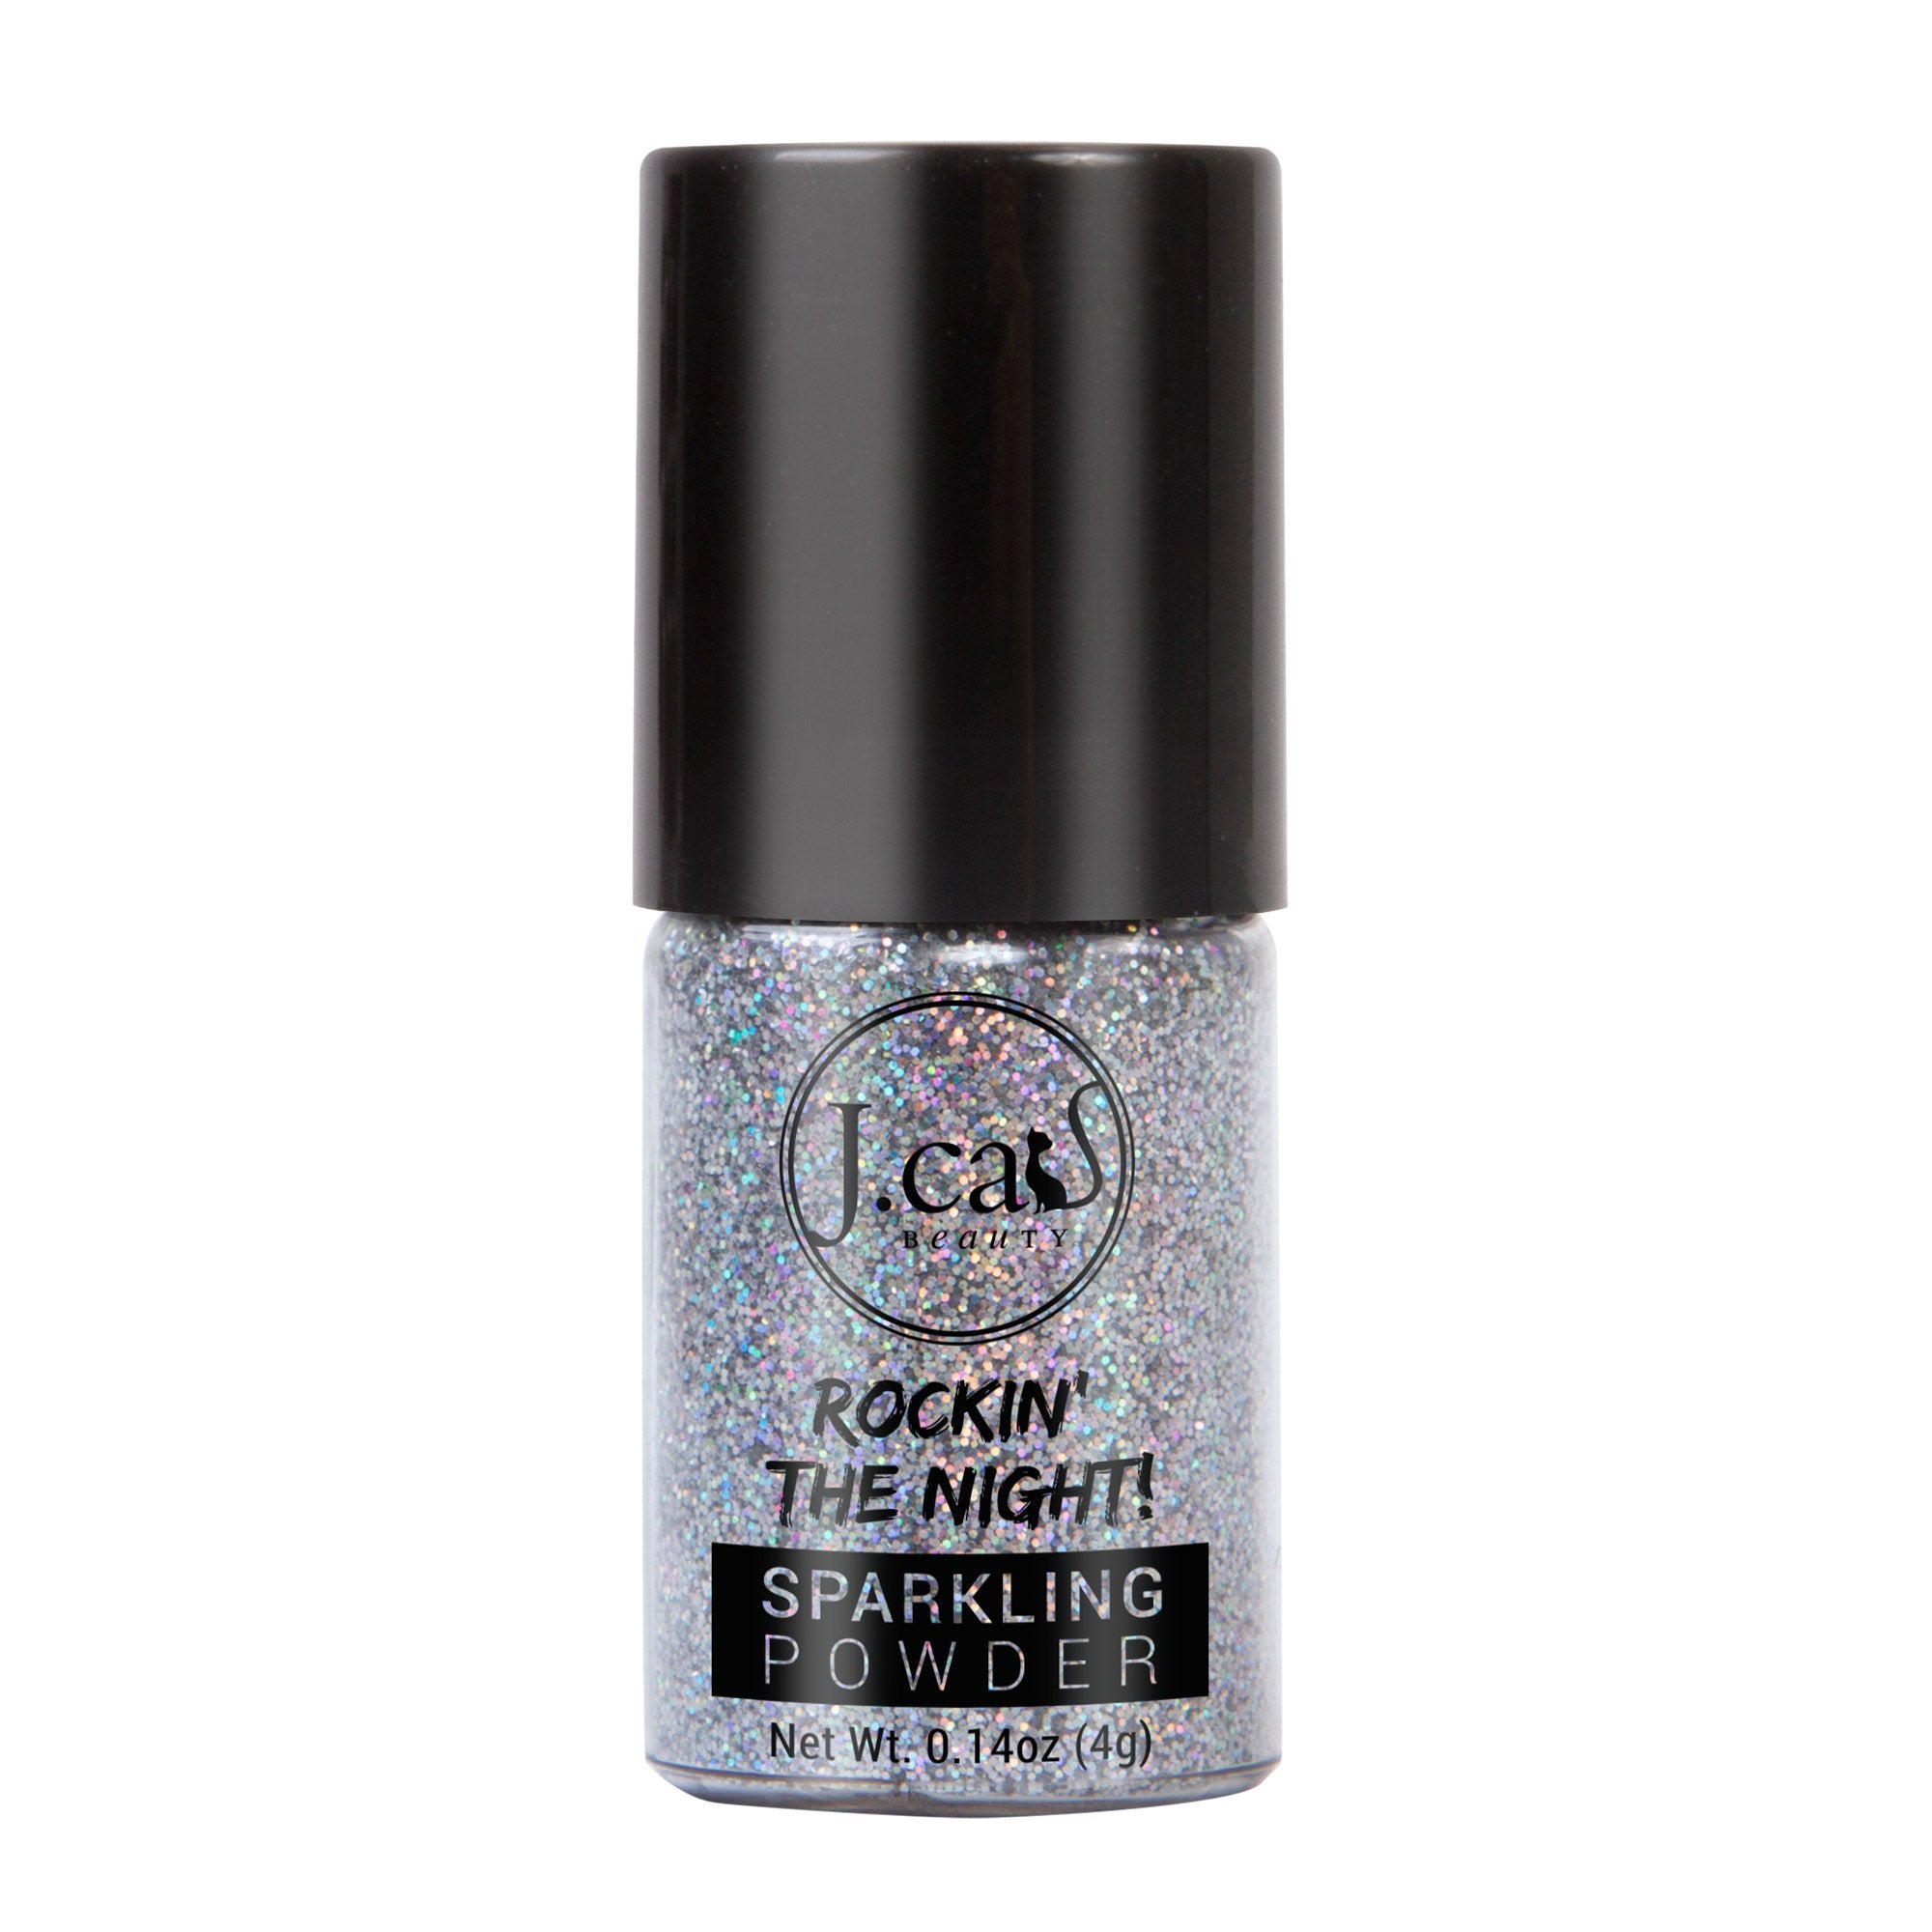 J.Cat Beauty - Rockin' The Night! Sparkling Powder